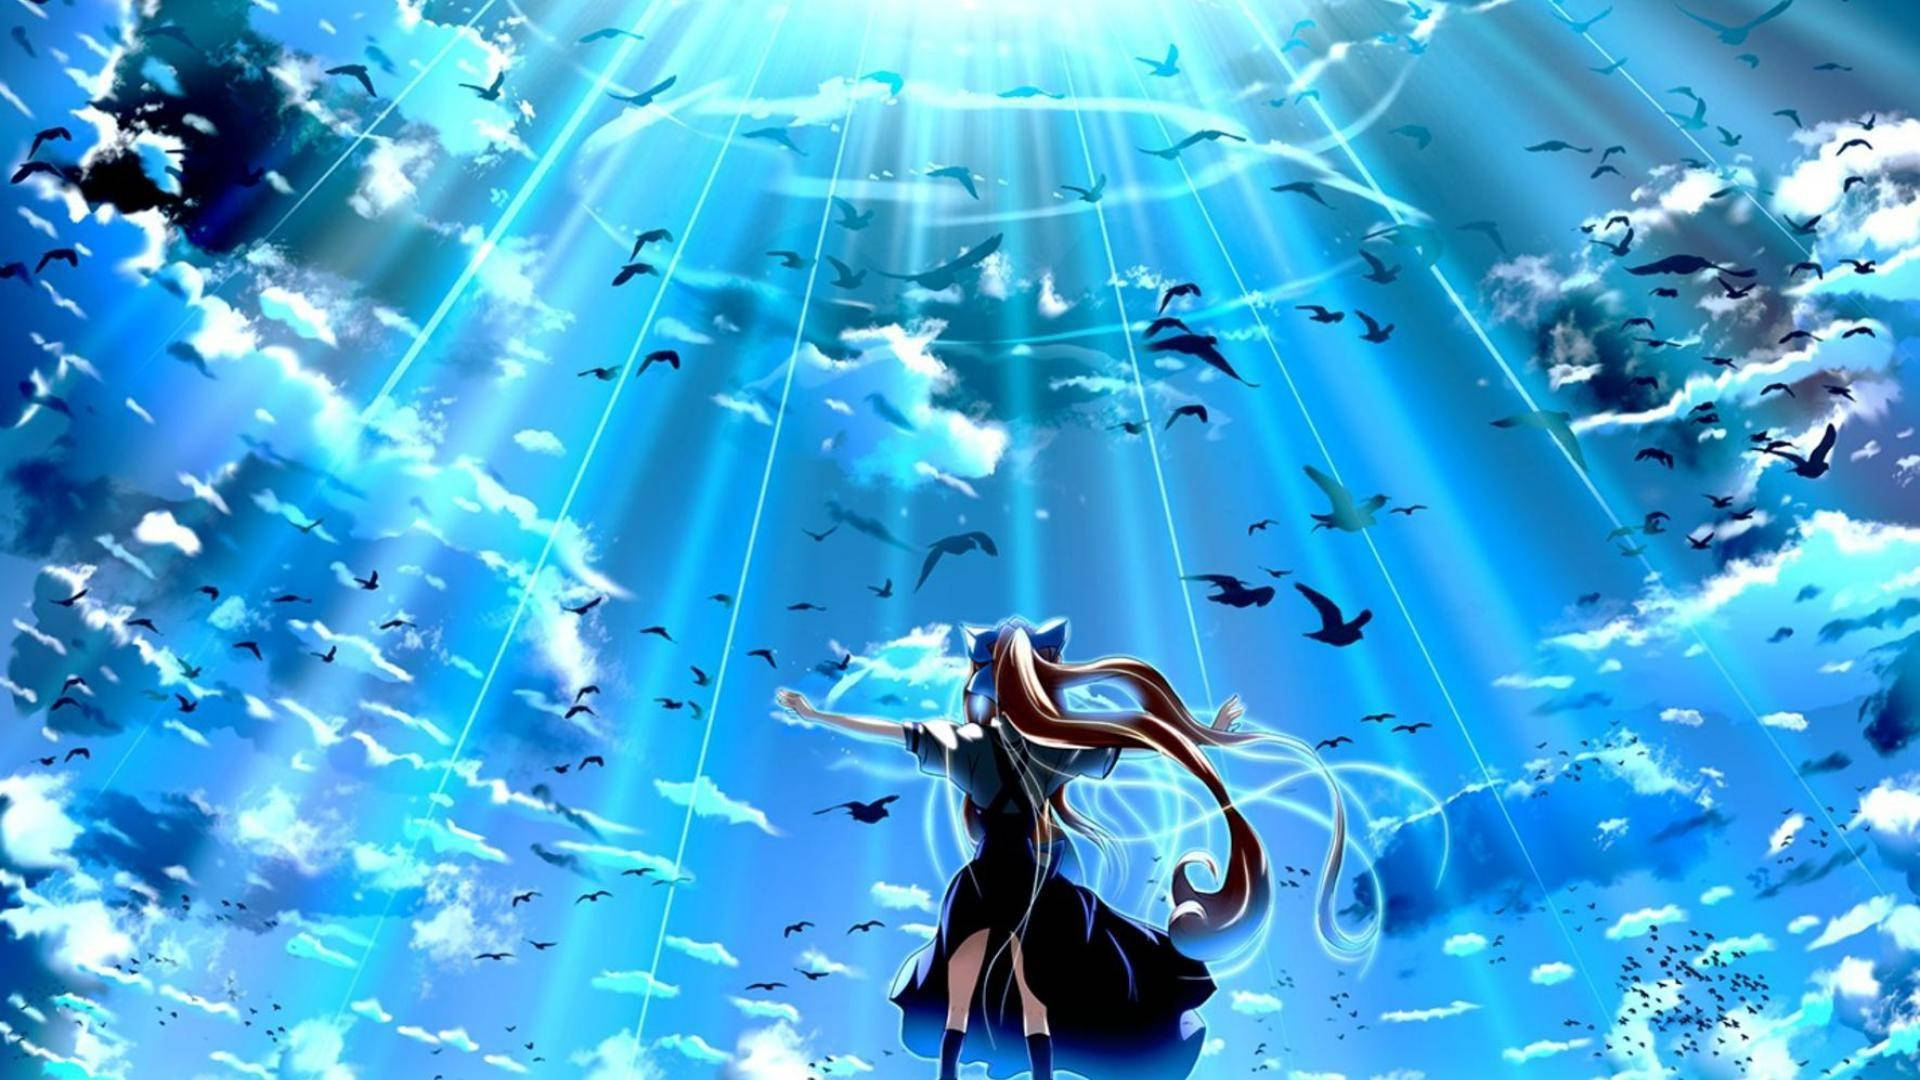 Anime Blue Girl Birds In Sky